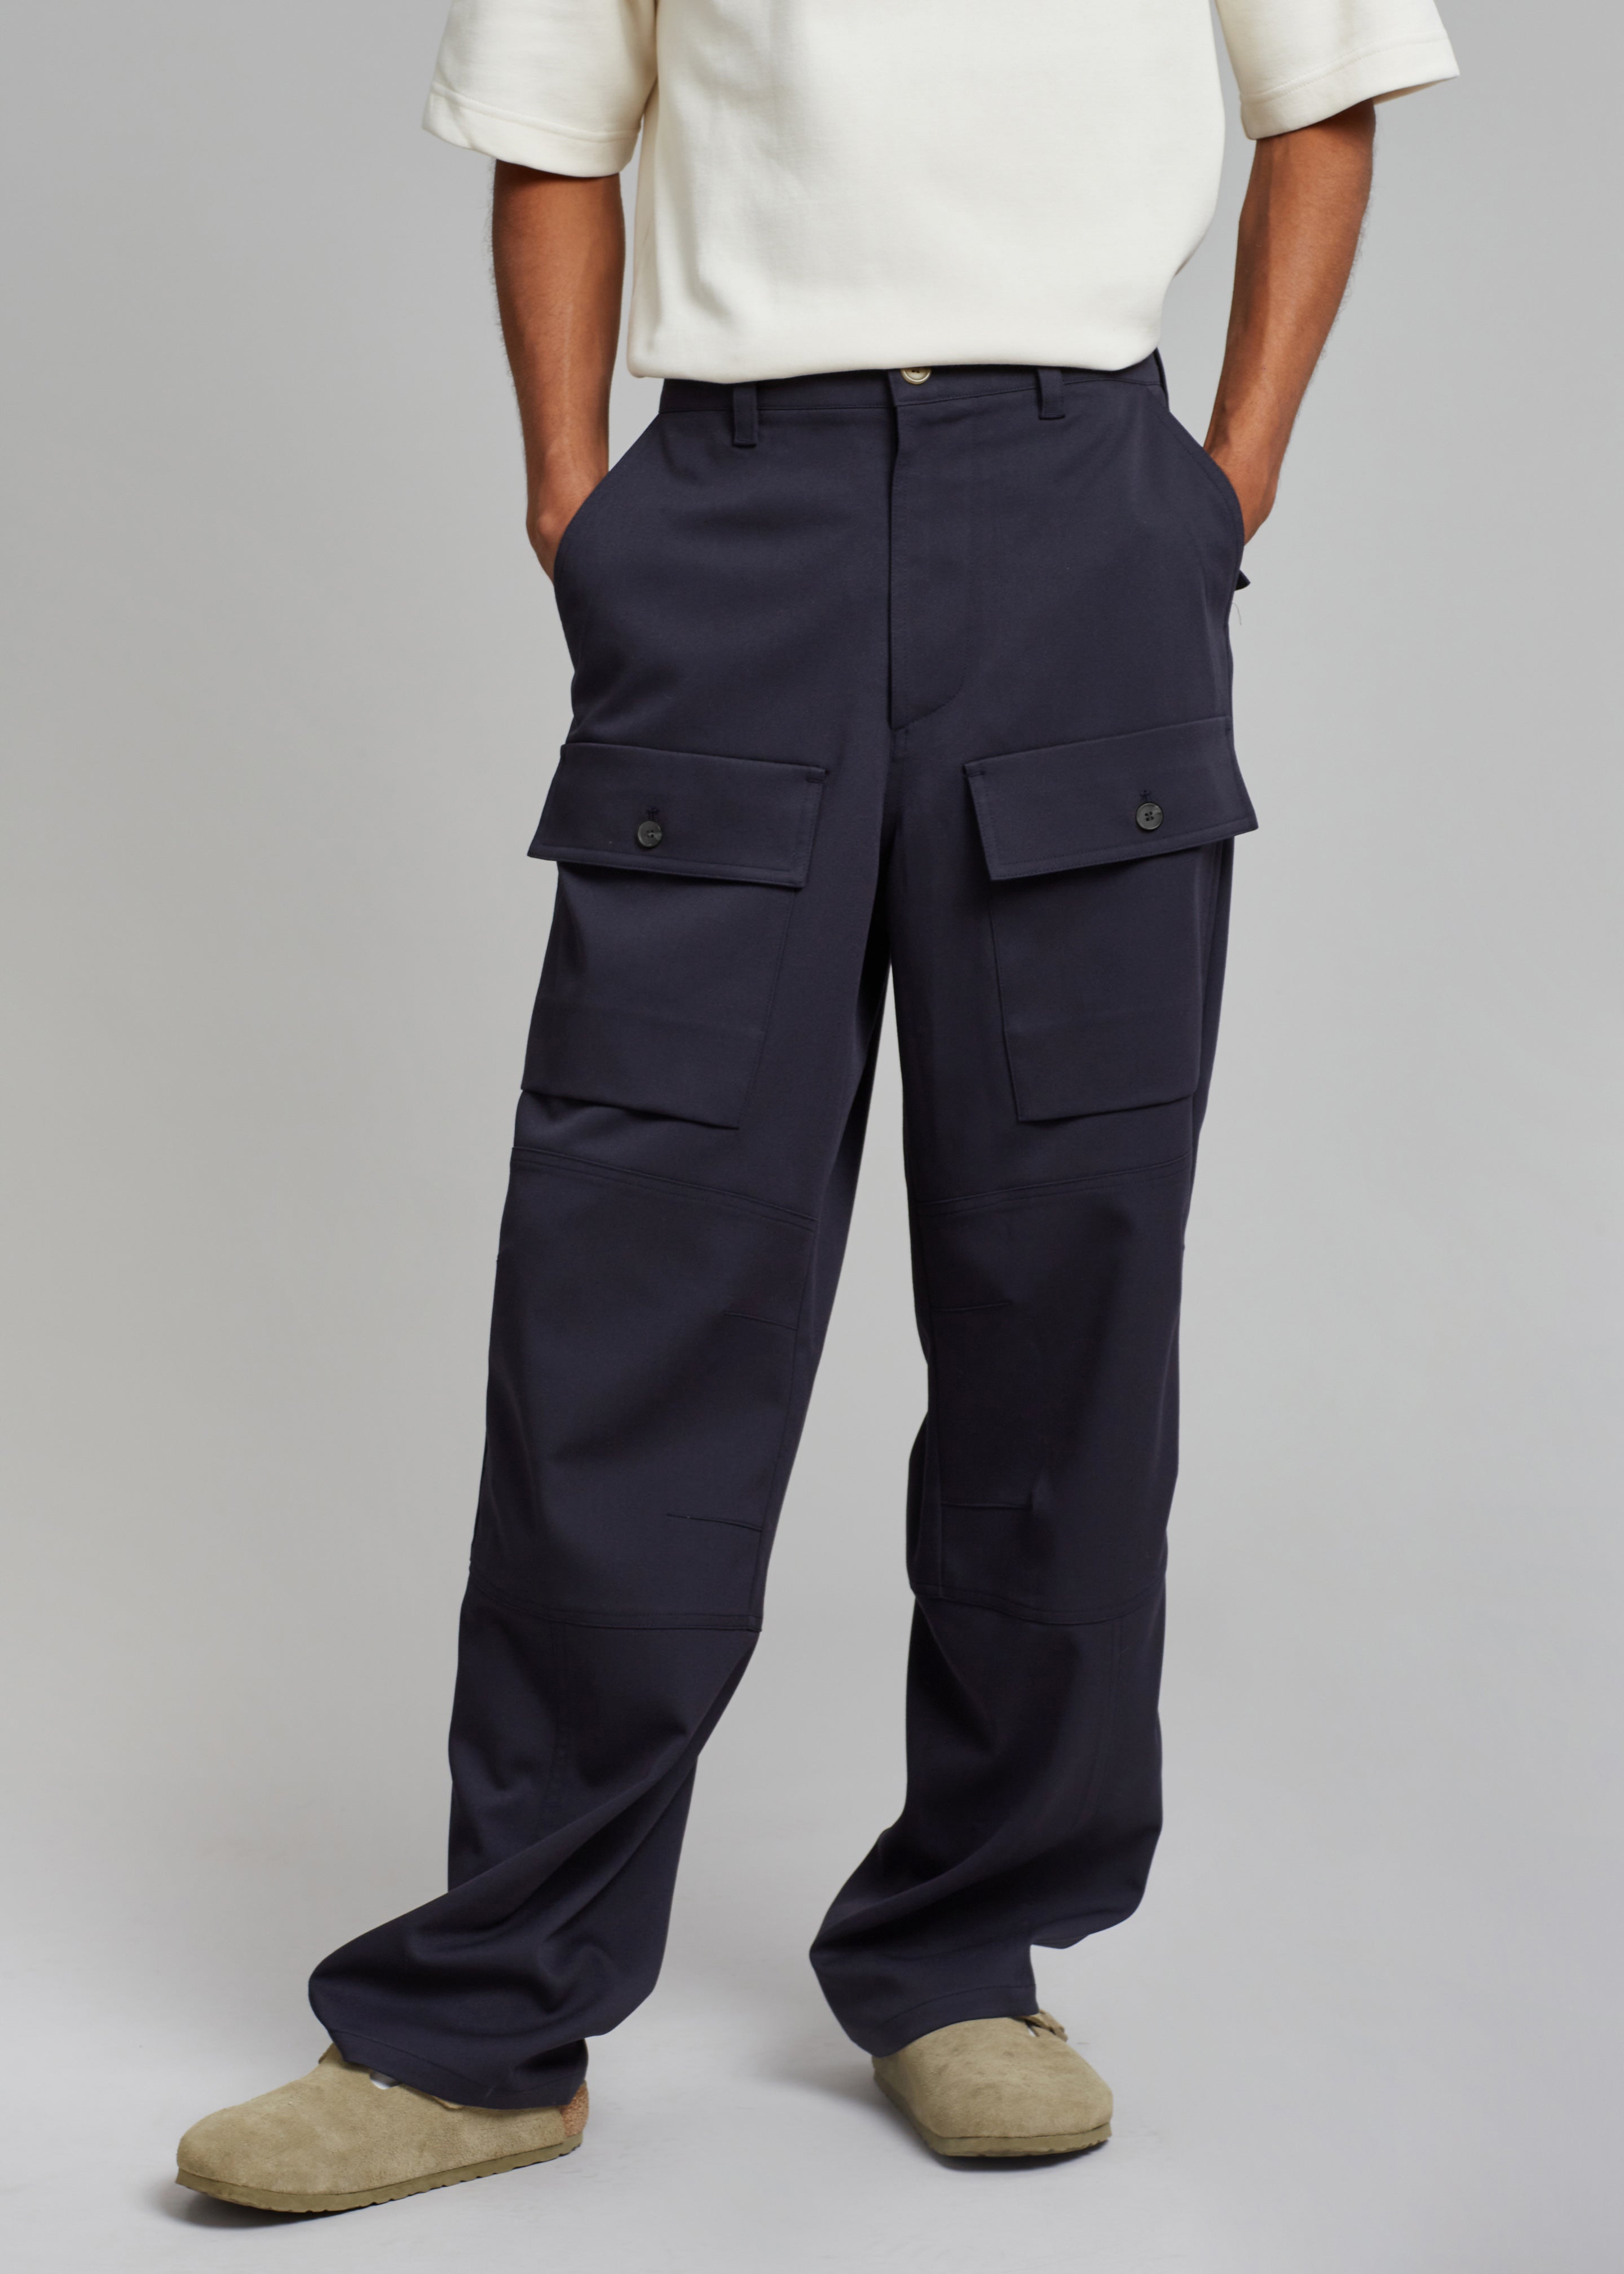 Navy Lightweight Pocket Cargo Pants